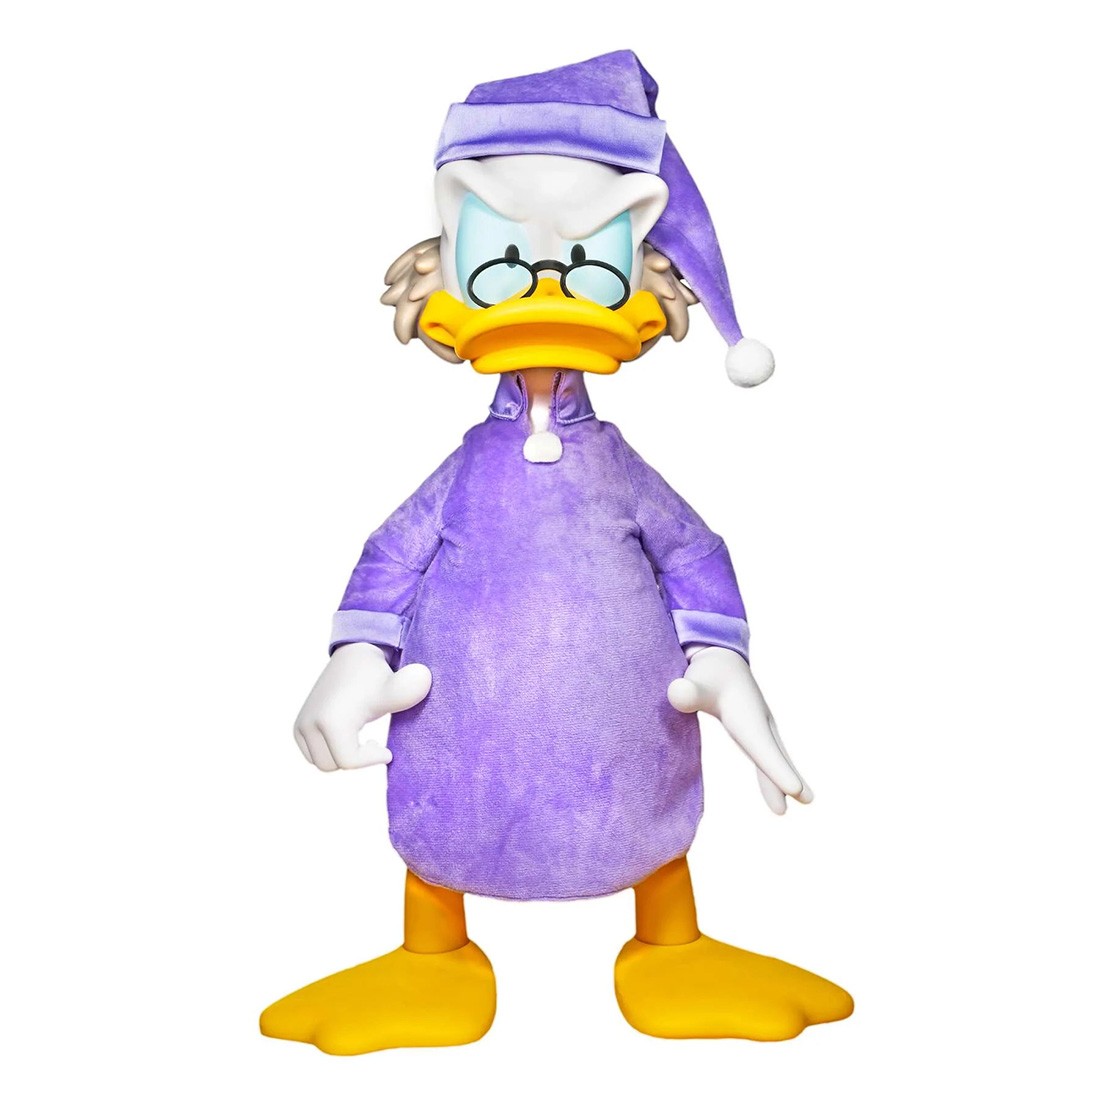 Super7 x Disney Ebenezer Scrooge Super Sized Figure (purple)